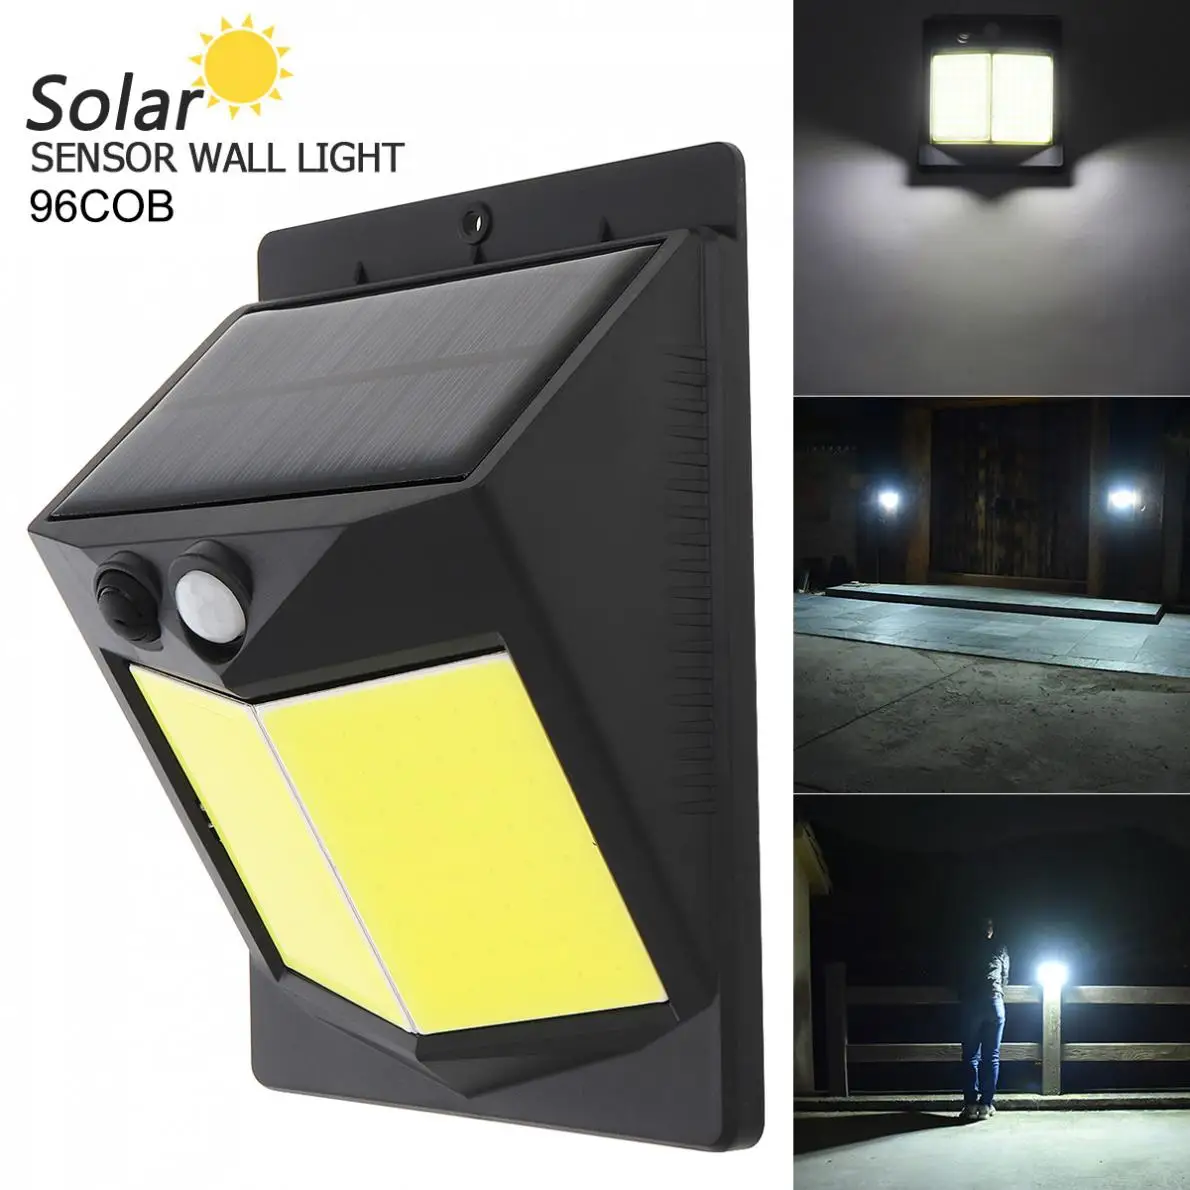 

96 COB 400LM Light-controlled Human Body Sensing Wall Light LED Solar Motion Sensor Light for Outdoor / Courtyard / Illuminating